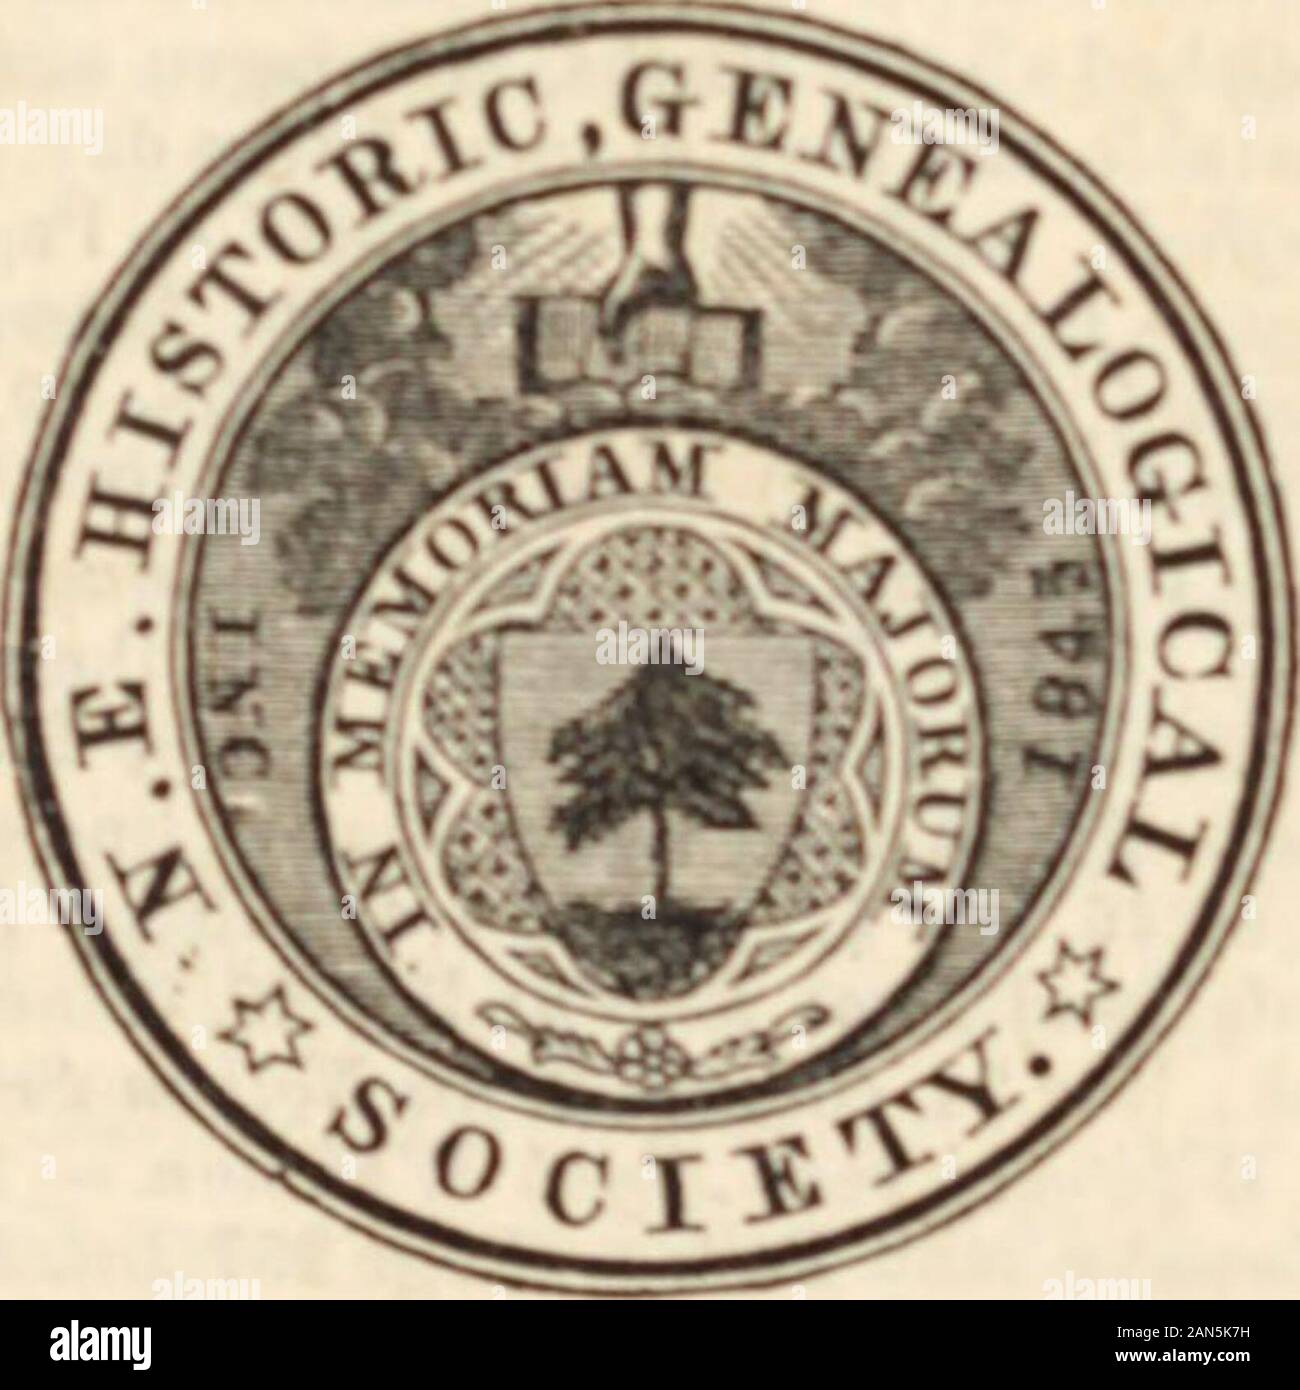 The New England historical and genealogical register . ortsmouth, N. H,—Jacob Wendel.Providence,—G. H. Whitney,Rochester, N. Y.,—D. M. Dewey.Salem,—Henry Whipple.Springfield,—J. G. Chase.Taunton, Ms.,—S. O. Dunbar.Utica,—Lansing Thurber.Washington, D. C,—Robert Farnham. —-=s III1, SAcrtV. BOSTON: SAMUEL G. D R A K E, PUBLISHER. 1849. ADDITIONS AND CORRECTIONS. In Vol. i. — Page 120, line 14, for Rev. John Brazier, D. D., read Rev. John Brazer, D. D. — Page 256, line 48, for (21—3) read (321—3). —Page 340, line 44, for Riv. B. B. Drarw,J). D, read Rev. R. B. Drane, D. D.— Page 342, line 12, aft Stock Photo